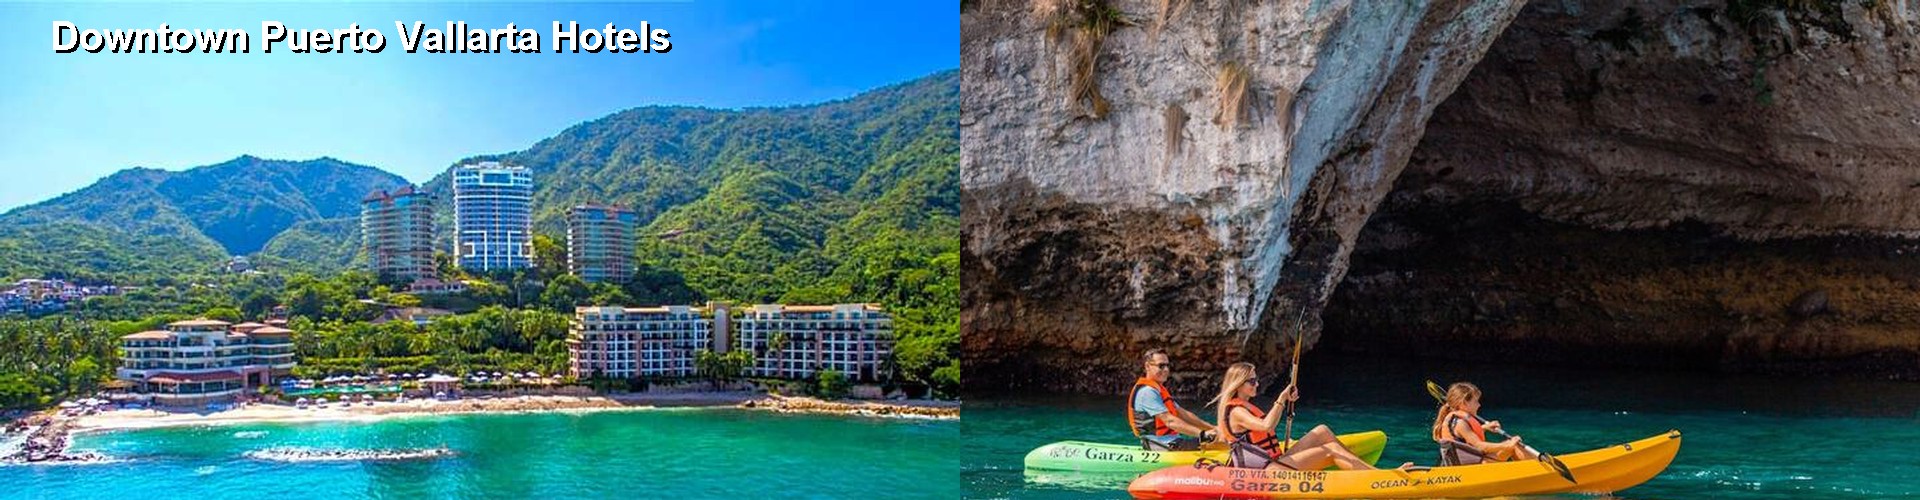 5 Best Hotels near Downtown Puerto Vallarta